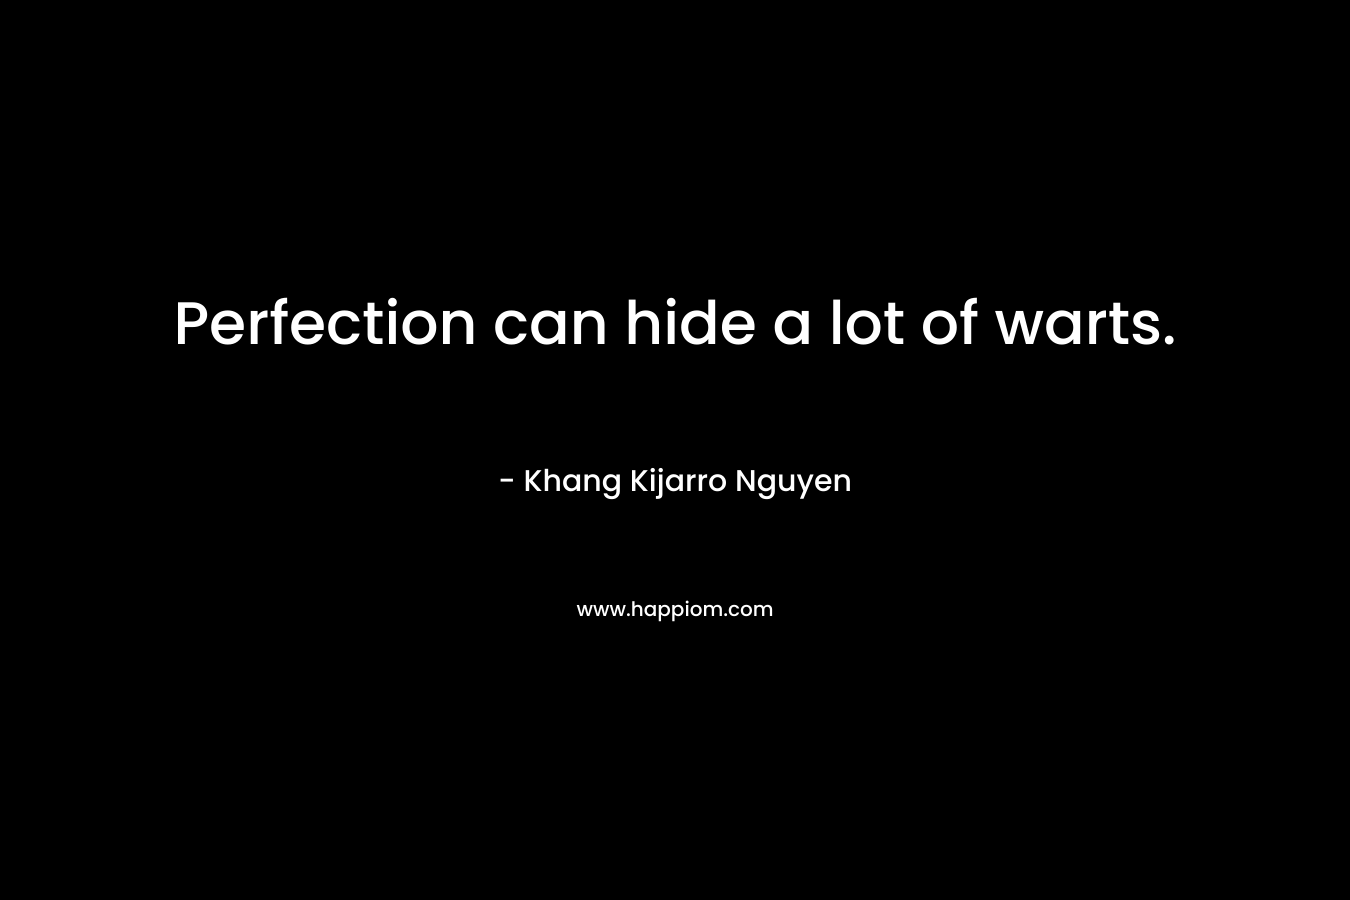 Perfection can hide a lot of warts. – Khang Kijarro Nguyen